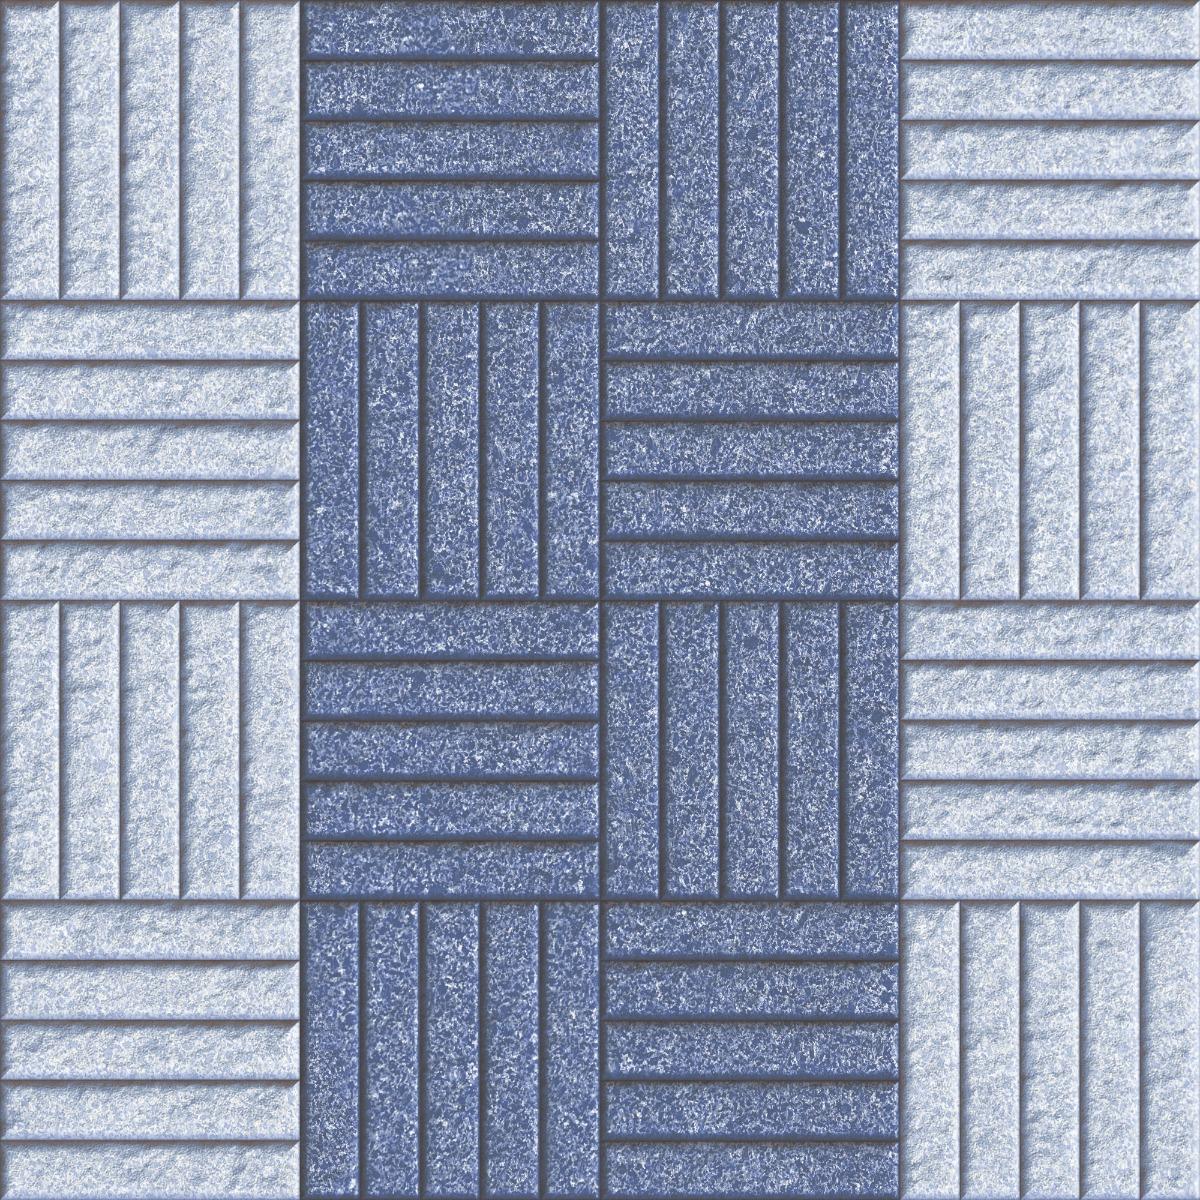 Parking Tiles for Commercial Tiles, Parking Tiles, Office Tiles, Pathway Tiles, Hospital Tiles, High Traffic Tiles, Bar/Restaurant, Outdoor Area, Porch/Parking